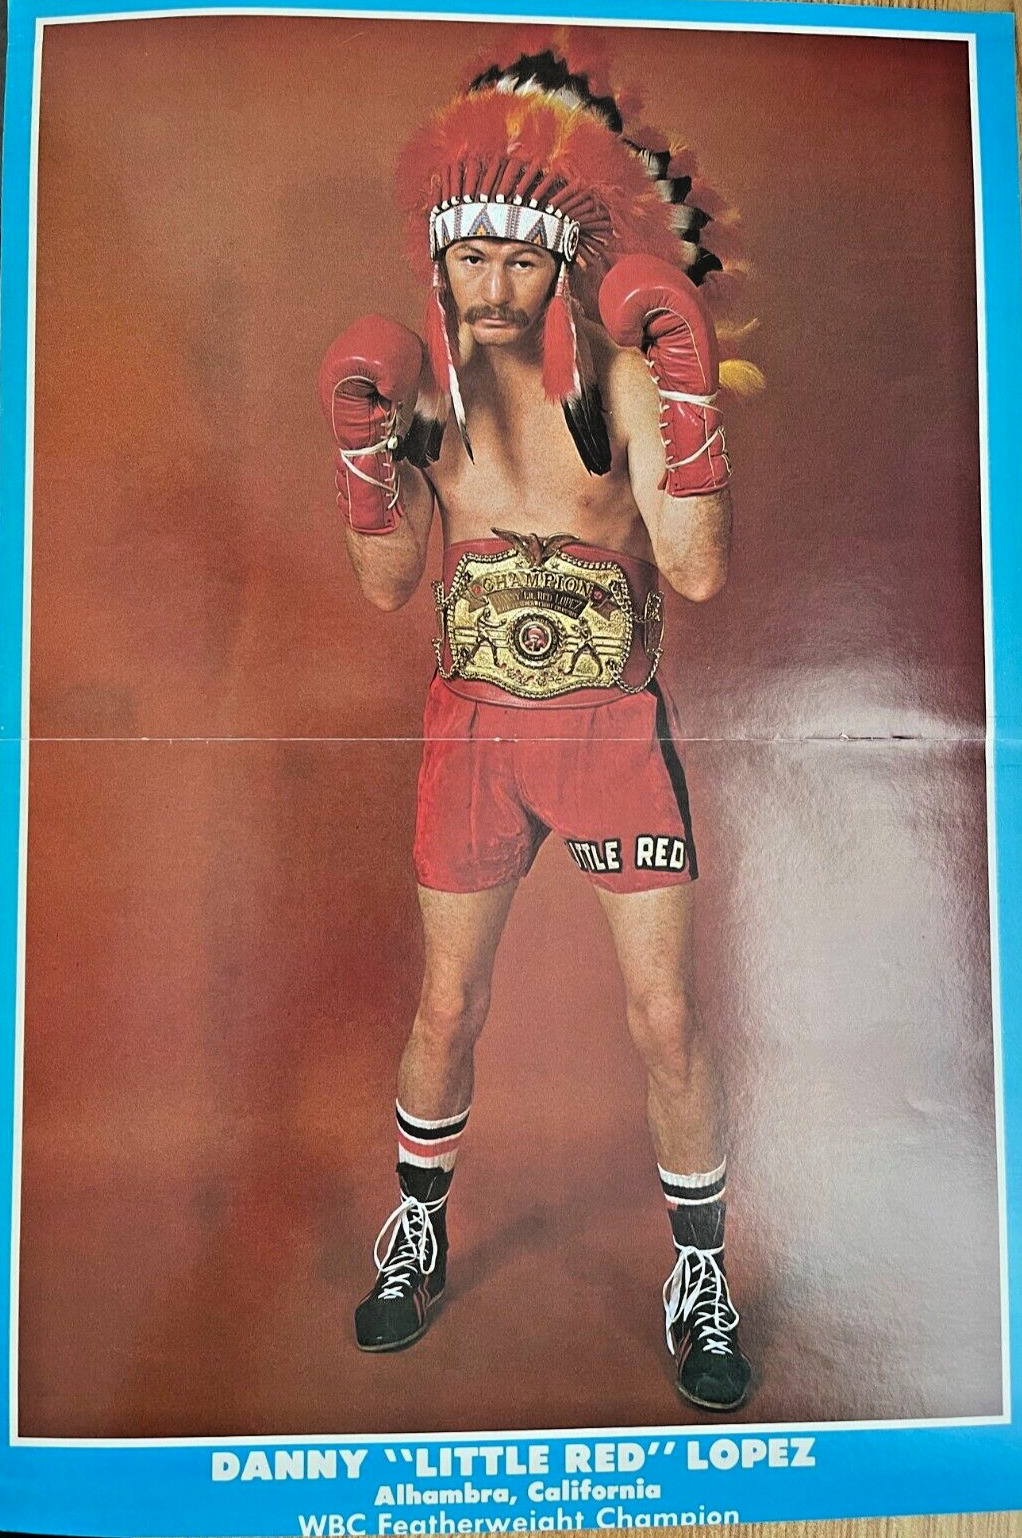 1980 Vintage Magazine Poster Boxer Danny Little Red Lopez